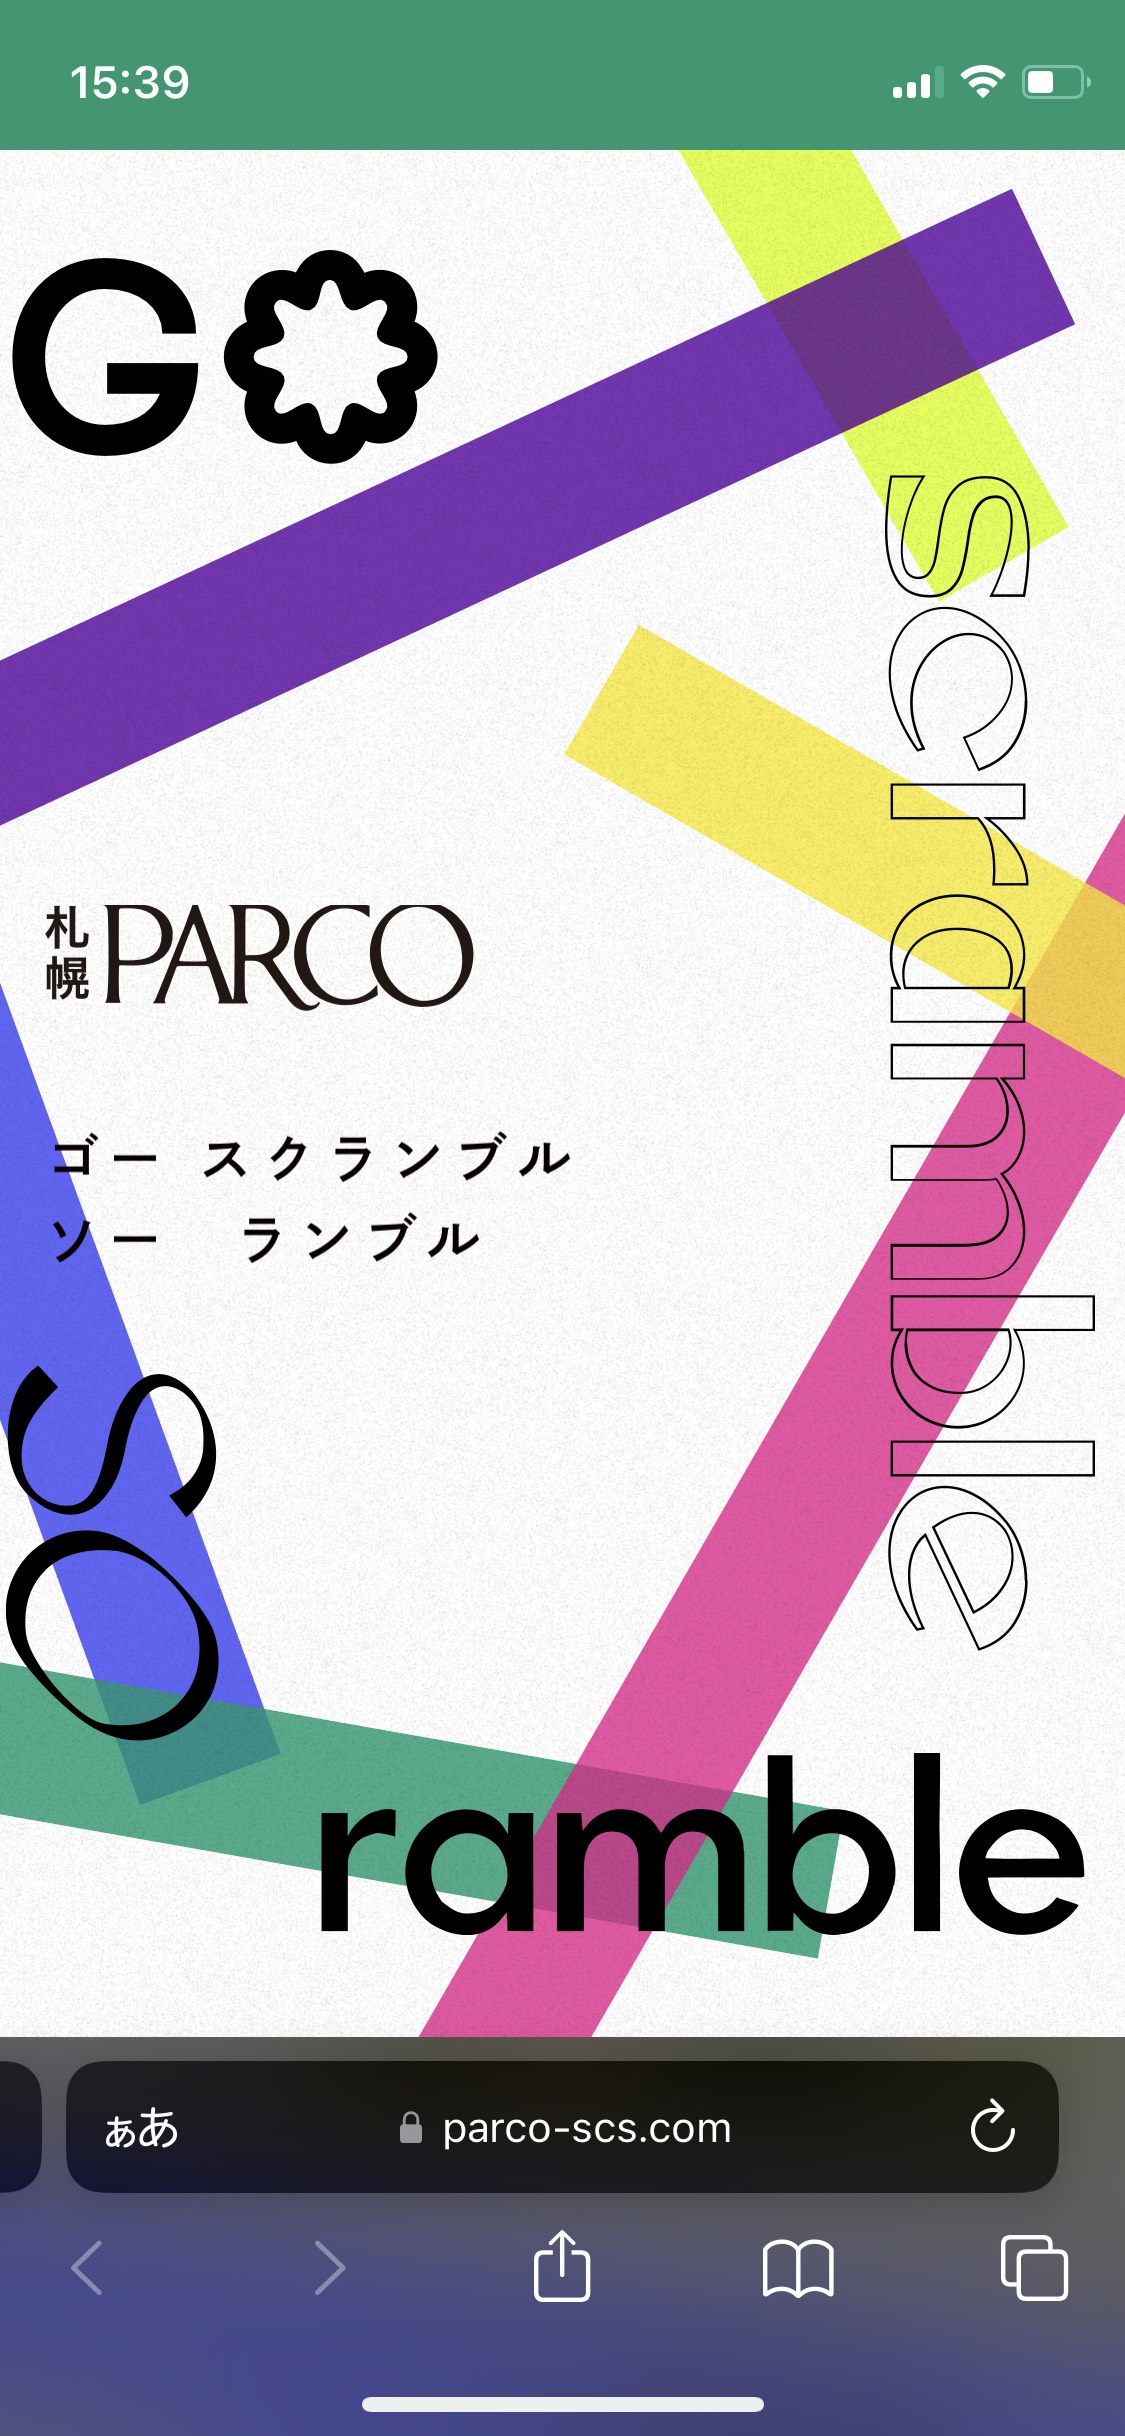 札幌PARCO GO scramble SO ramble